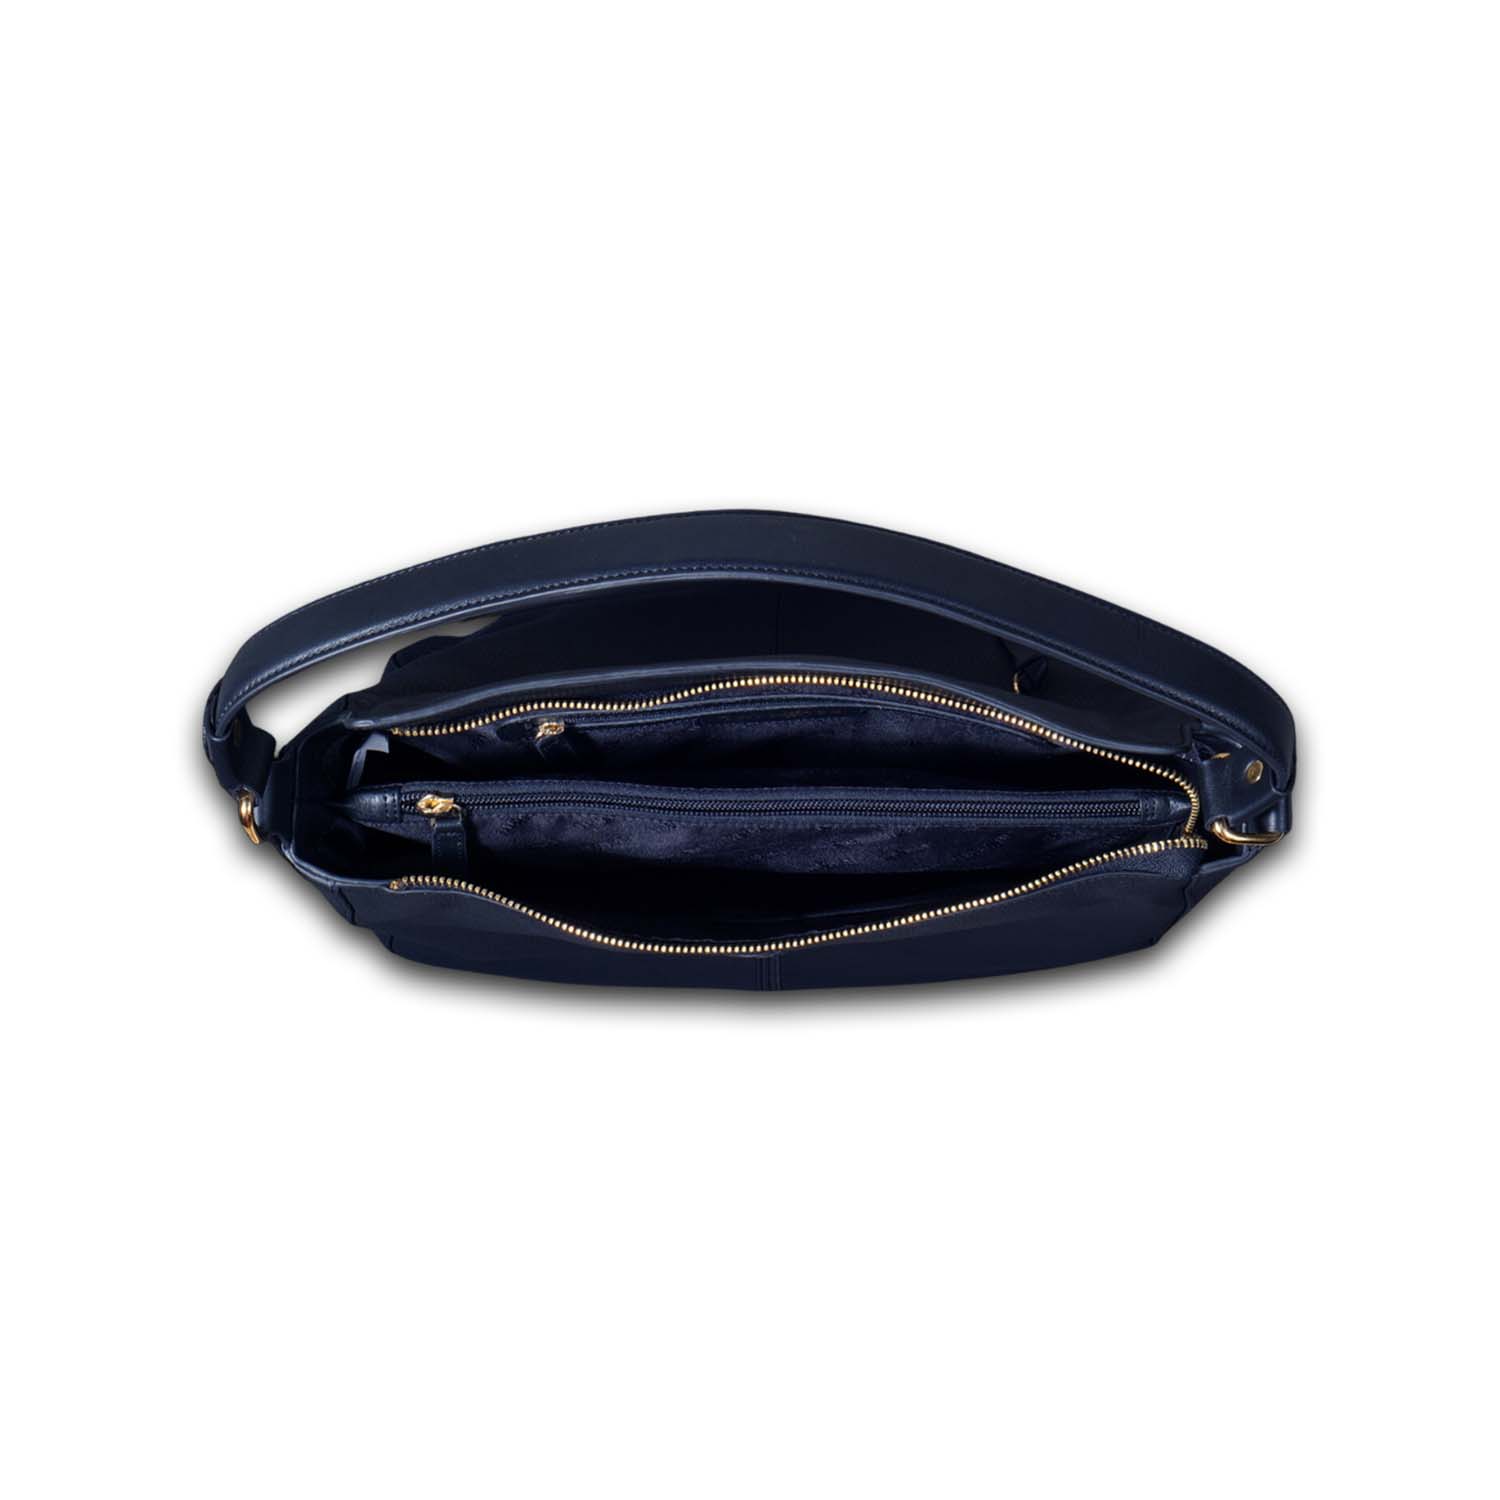 Ivanna - The Handbag/Sling Bag - Dark Blue - Tortoise  